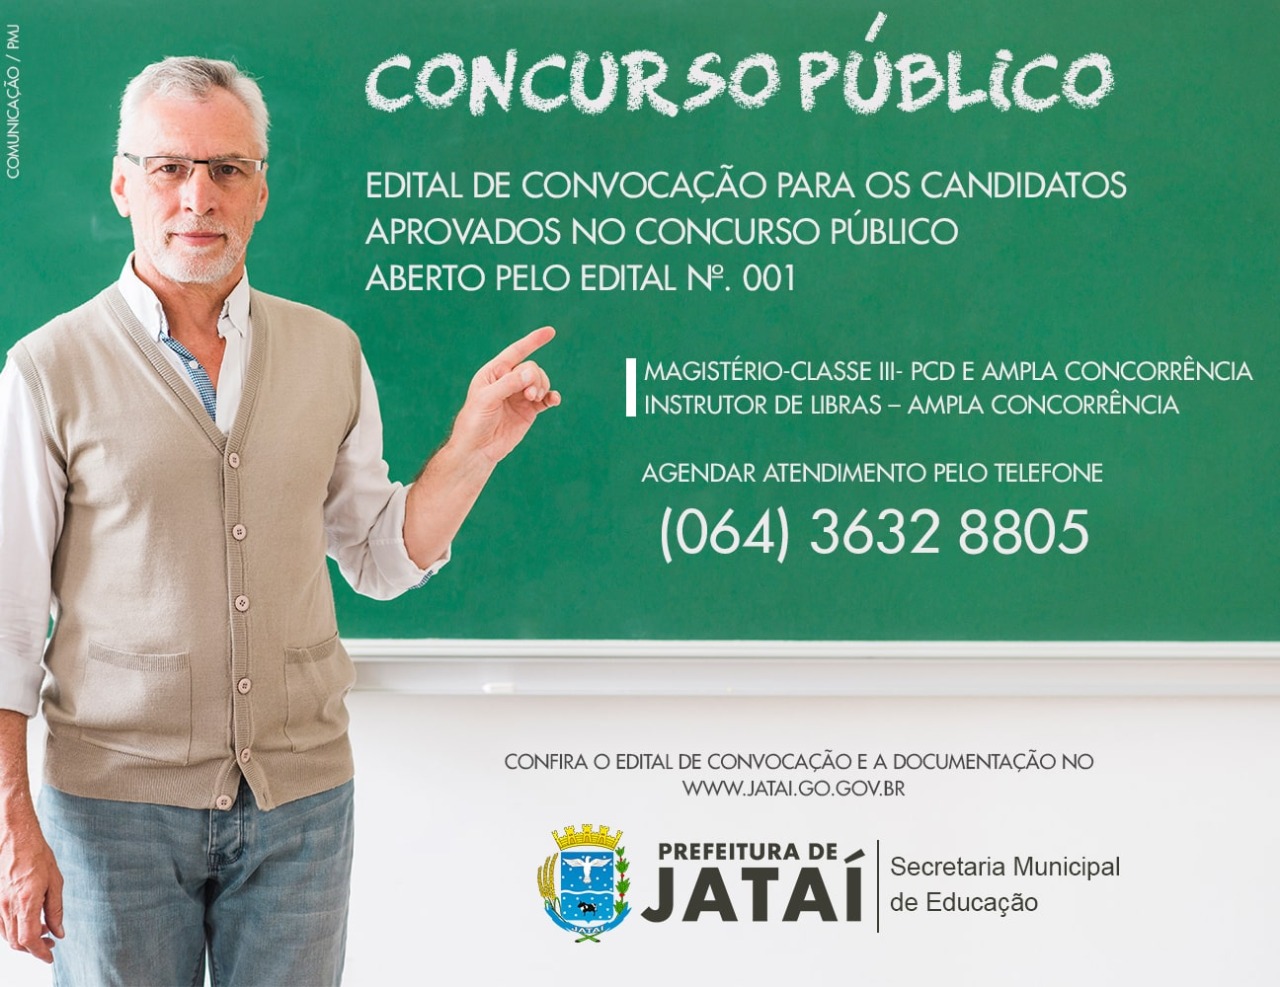 Jataí convoca aprovados no Concurso Público aberto pelo Edital nº. 001